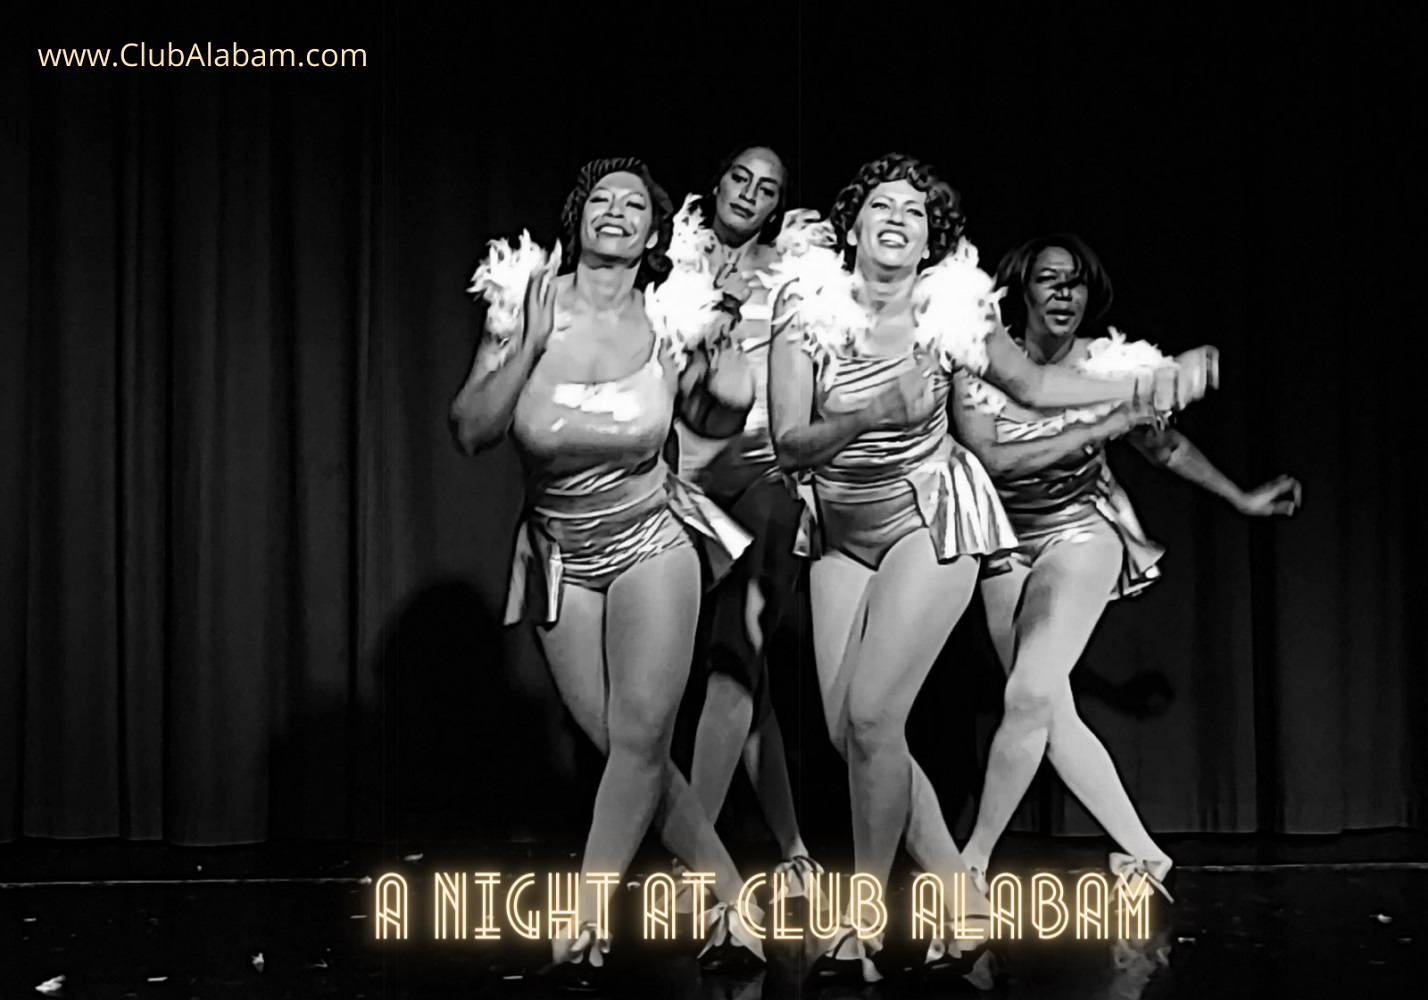 CentraNight at Club Alabam Chorus Line - Photo courtesy of l Avenue Dance Ensemble